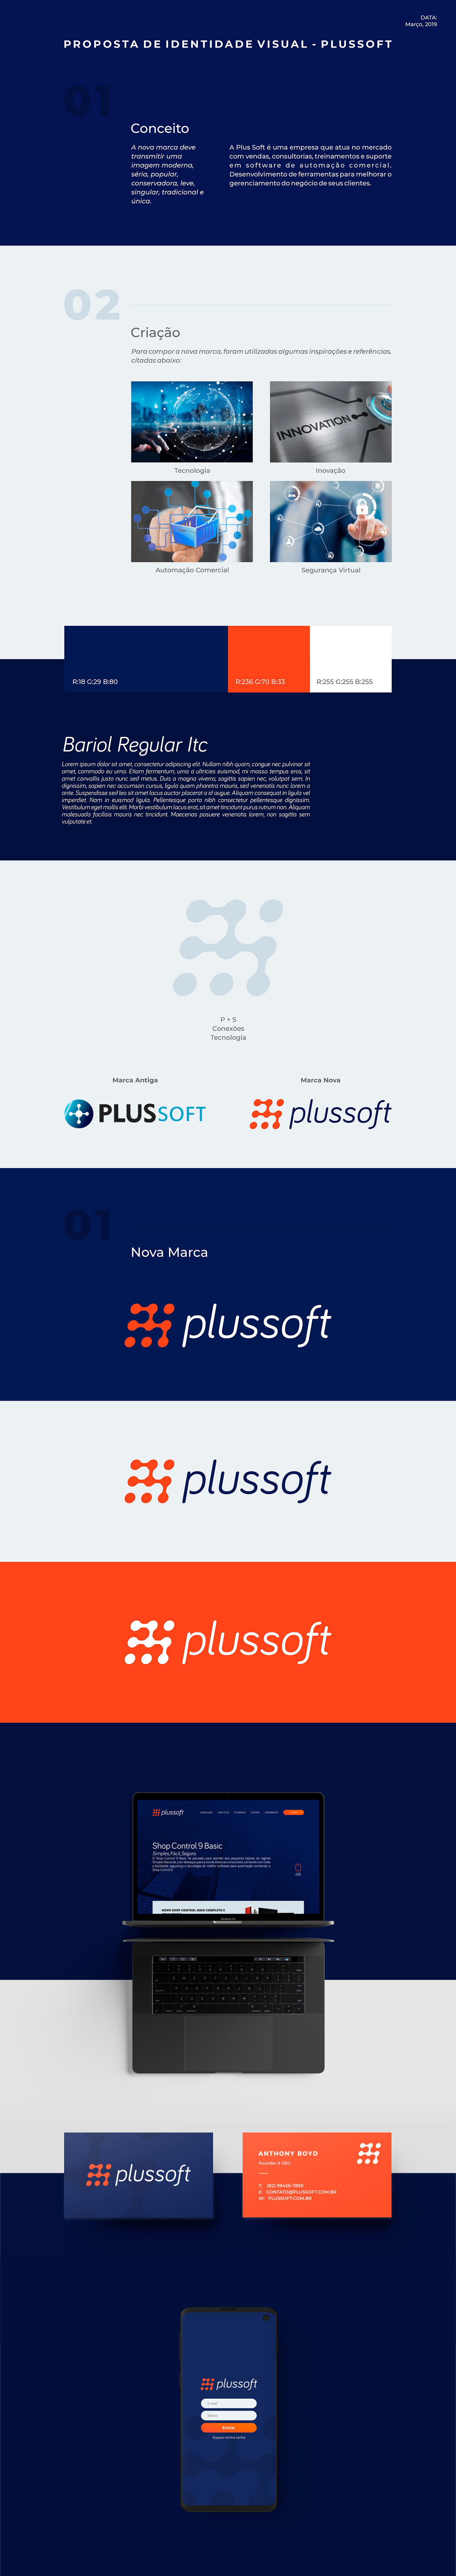 identidade visual Logotipo Logomarca marca logofolio plussoft